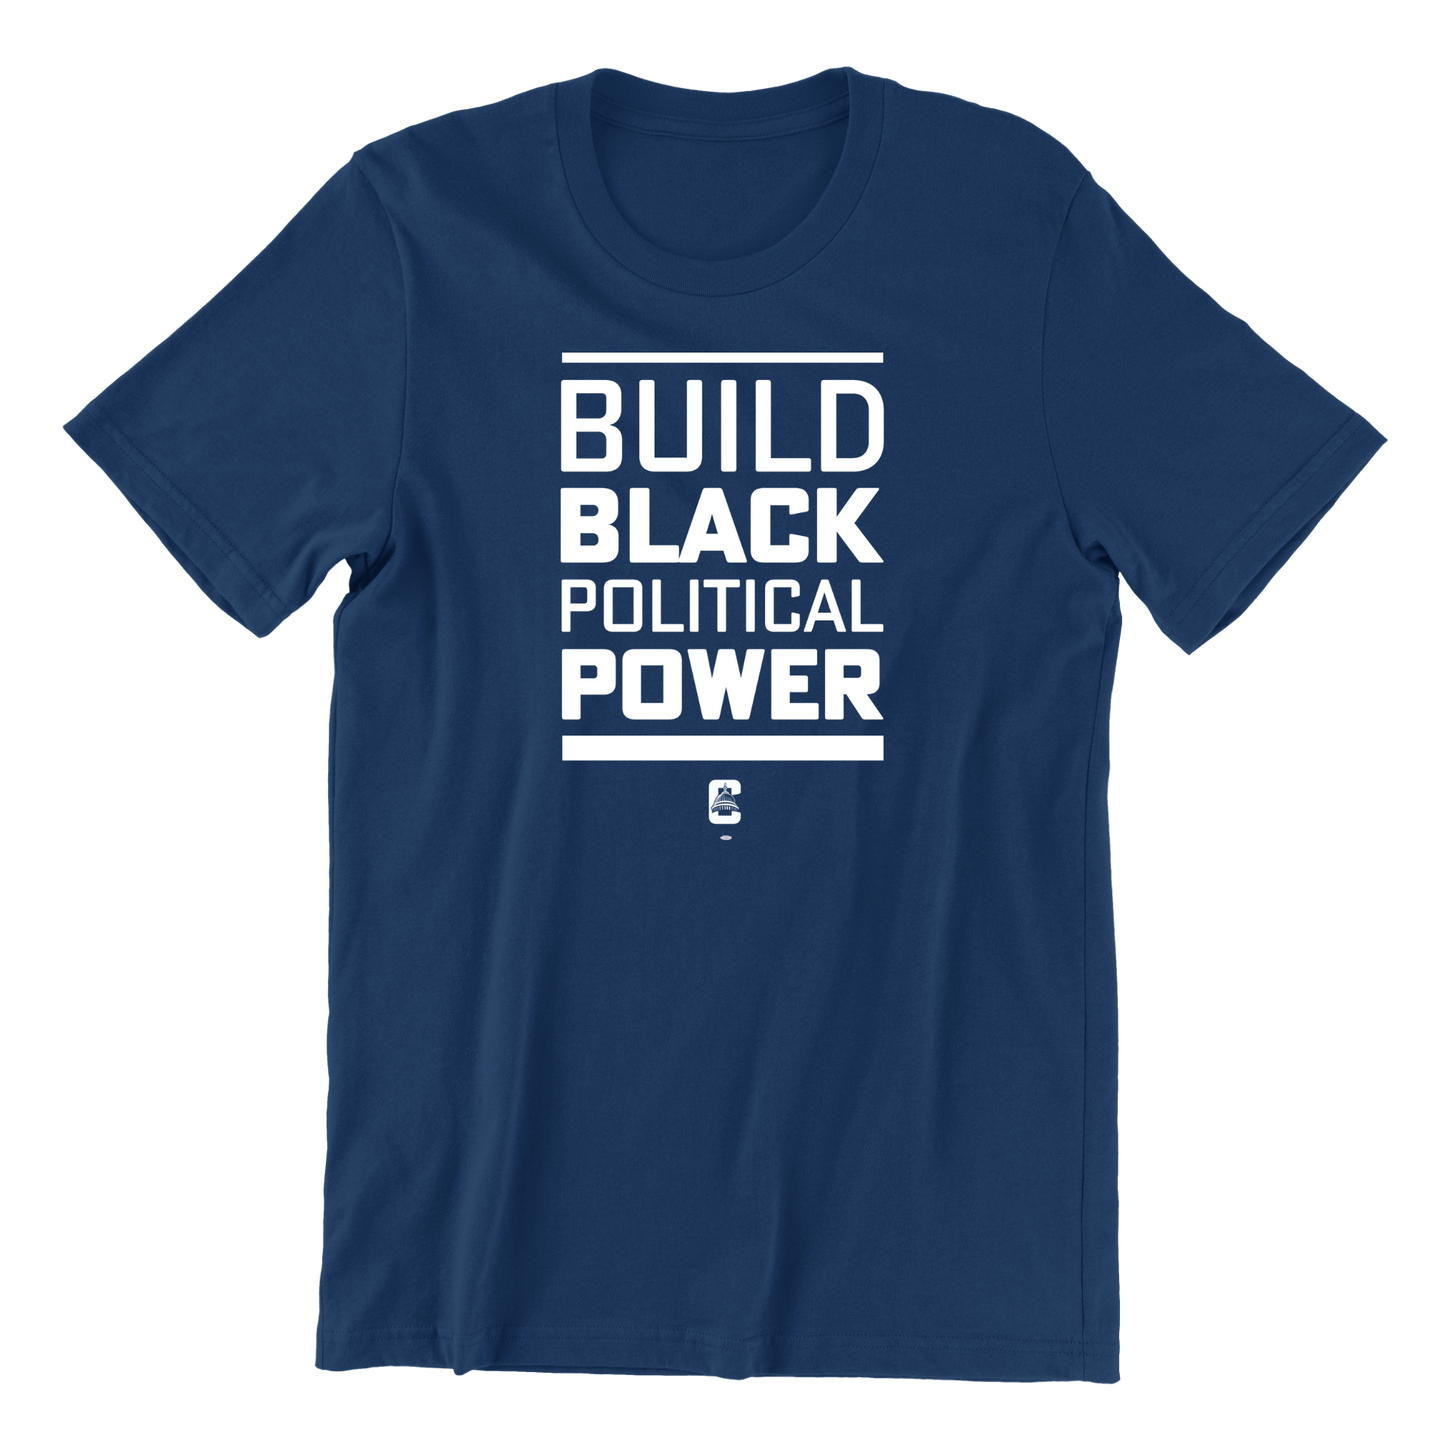 BUILD BLACK POLITICAL POWER T-SHIRT